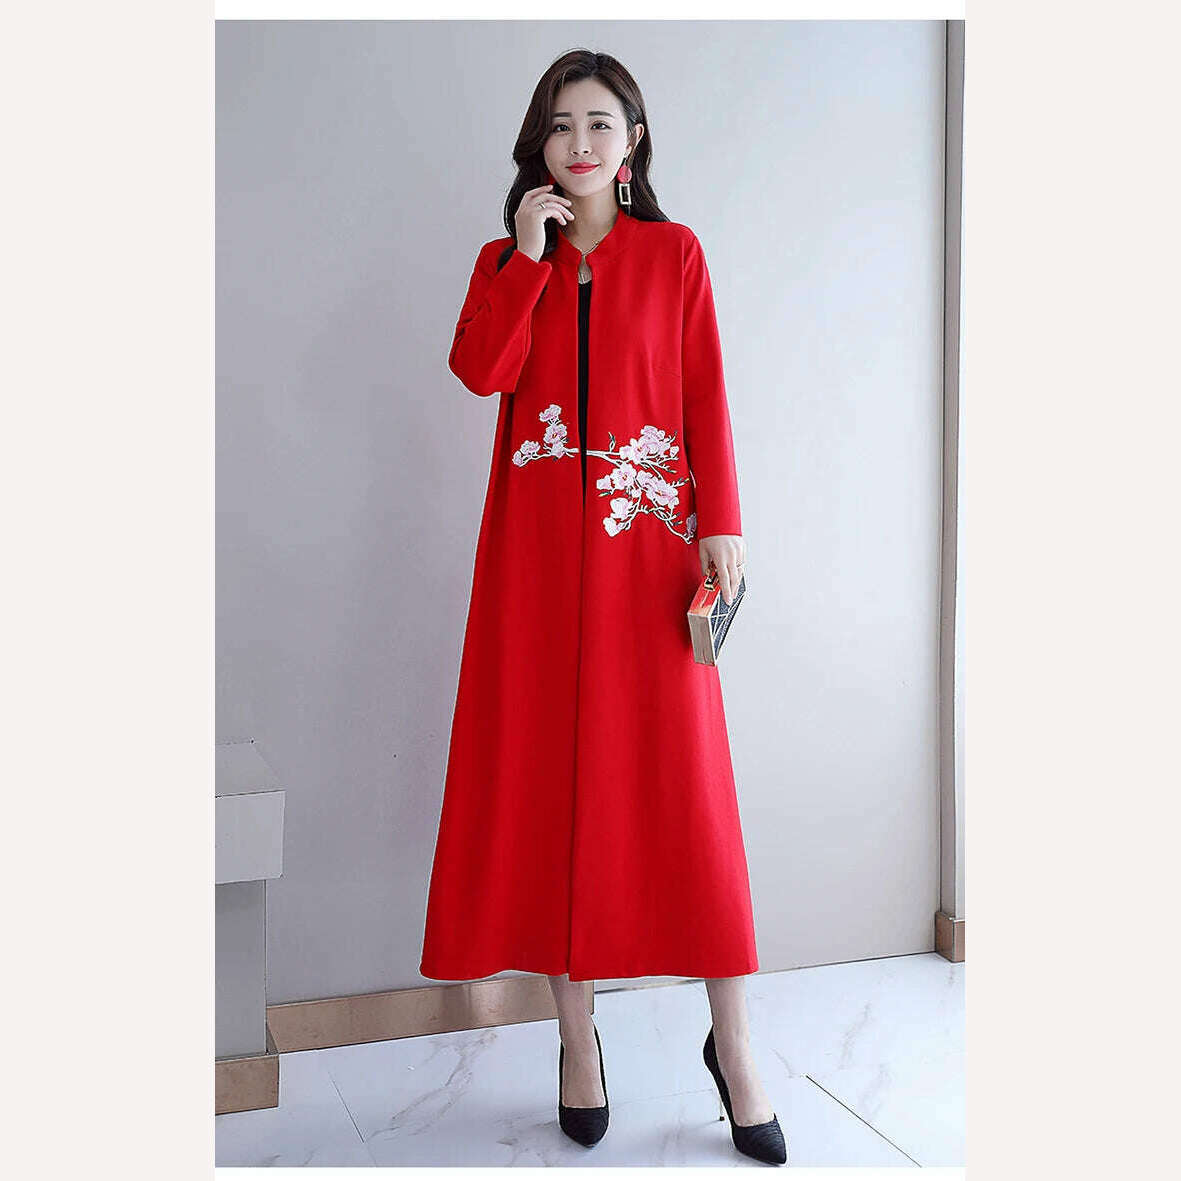 KIMLUD, 2020 New Chinese Style Women's Black Retro Embroidery Long Cardigan Long Trench Coat Spring Autumn Female Windbreaker тренч, KIMLUD Women's Clothes